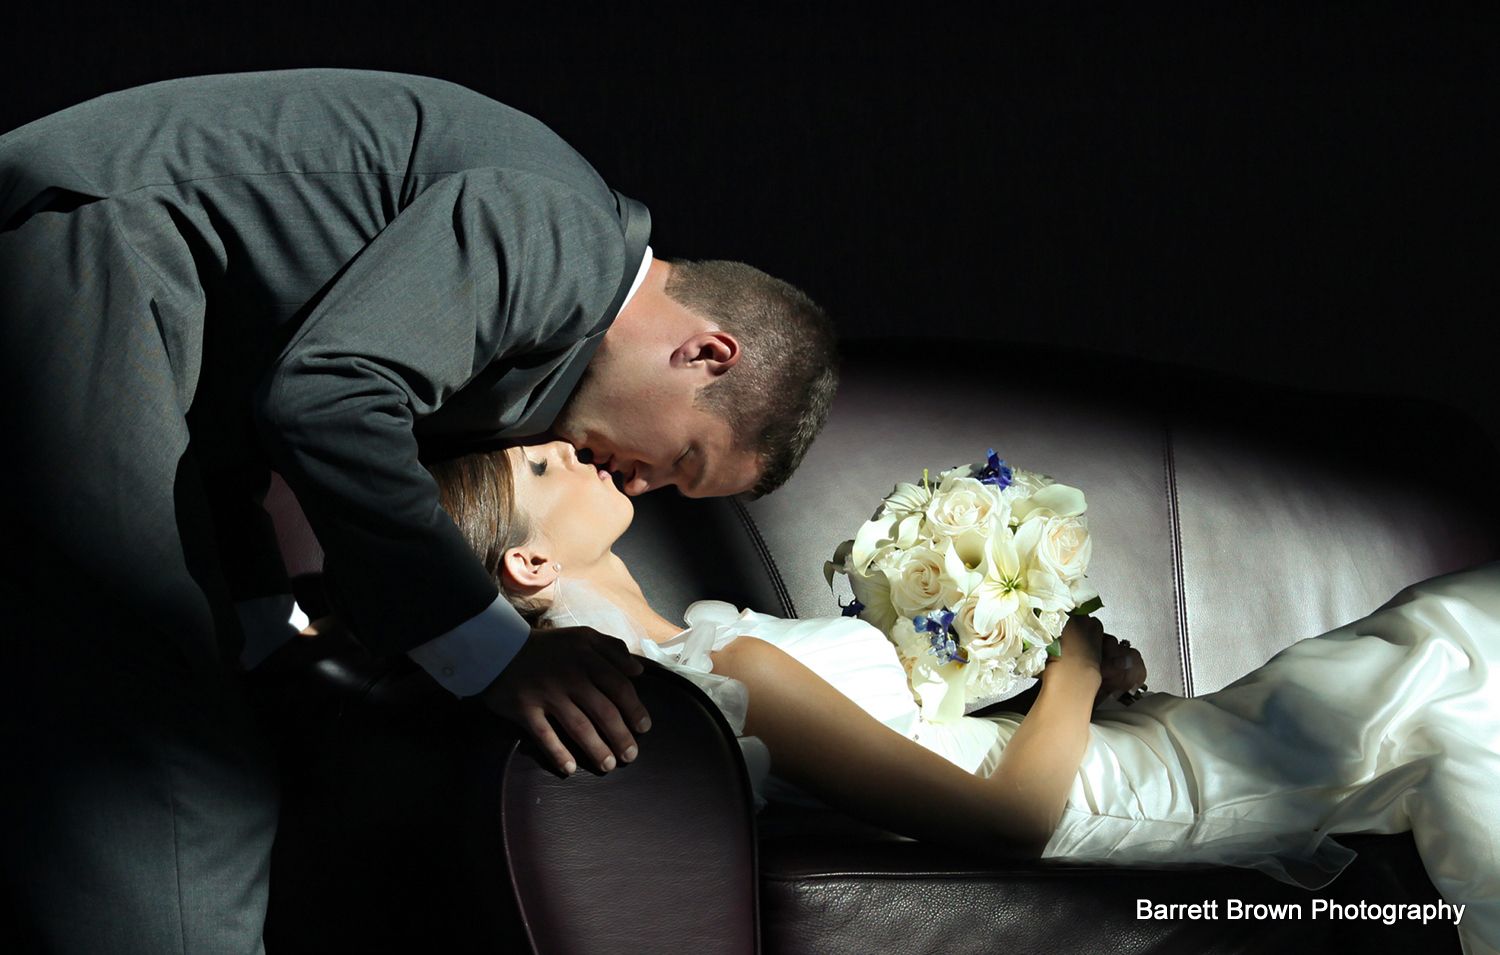 Groom kissing bride as she lies on a couch like Sleeping Beauty